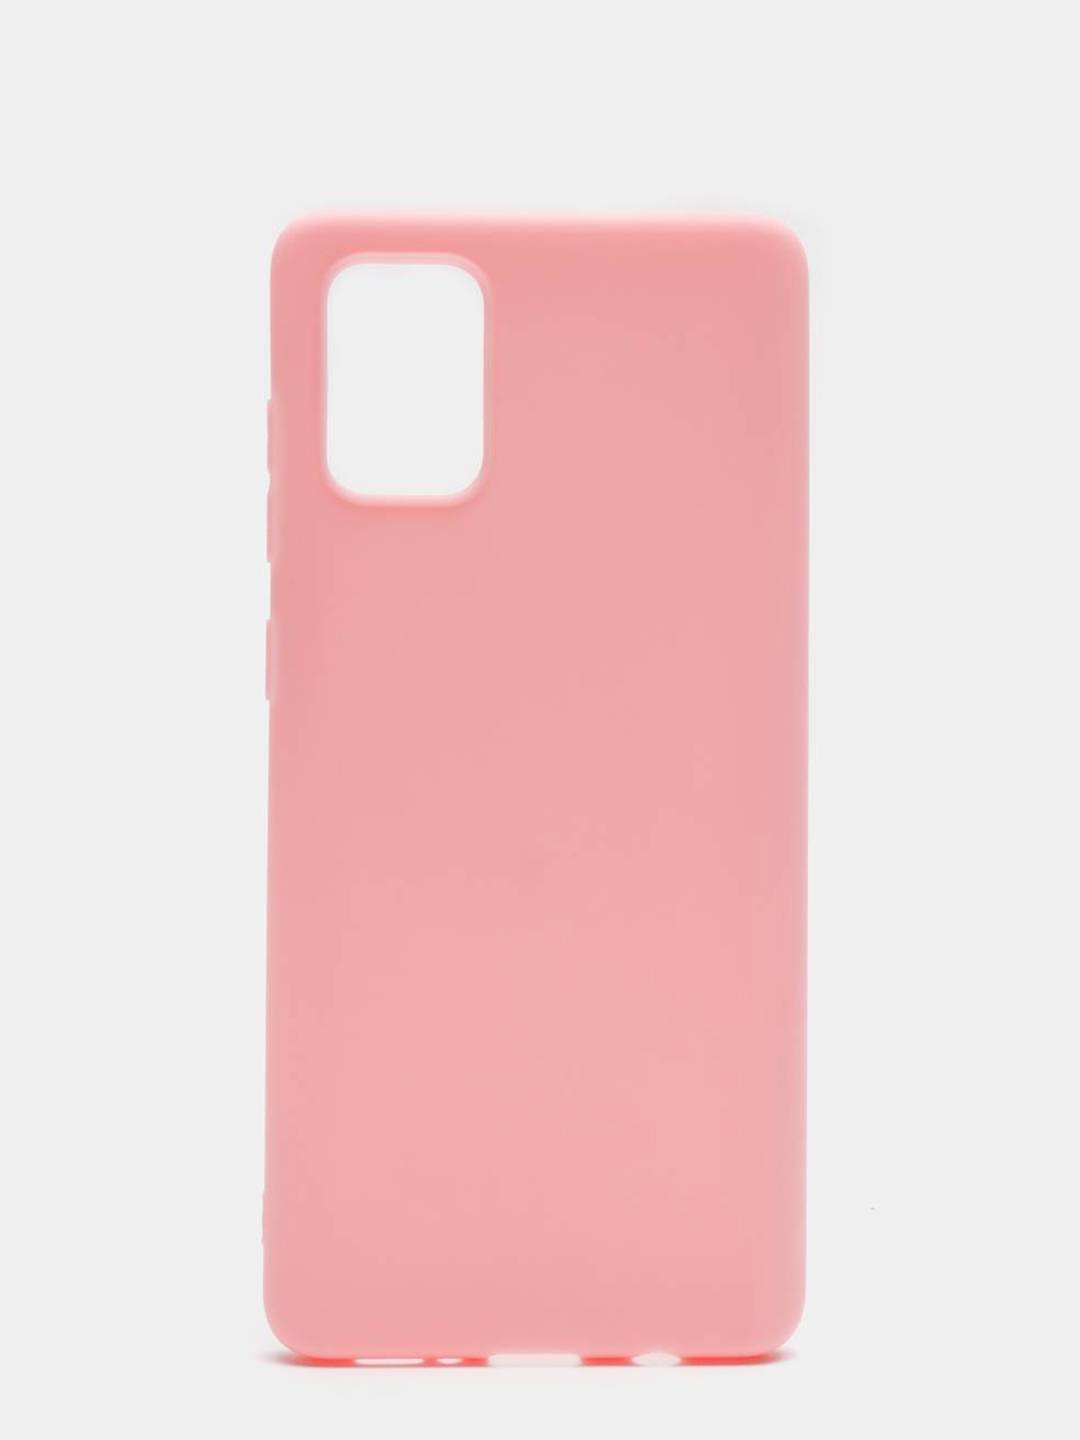 Чехол розовый iphone. Чехол Silicone Case для iphone 11 Pro Max розовый. Чехол iphone 11 Pro Silicone Case - Pink Sand розовый. Чехол Silicone Case для iphone 11 (кремовый). Silicone Case iphone 11 Pro розовый.